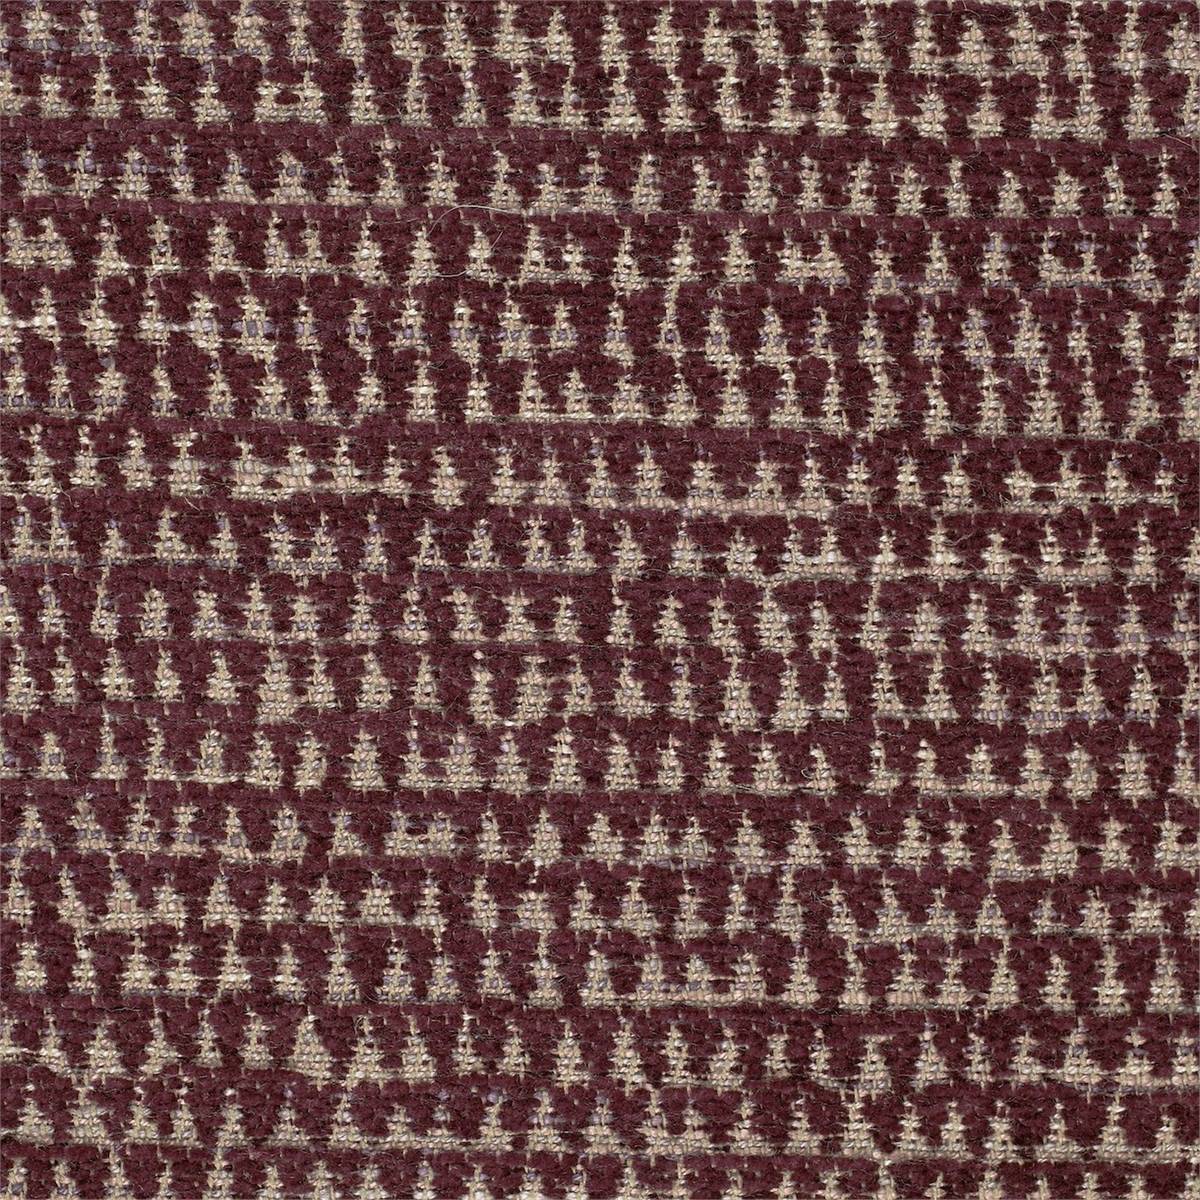 Merrington Claret Fabric by Sanderson